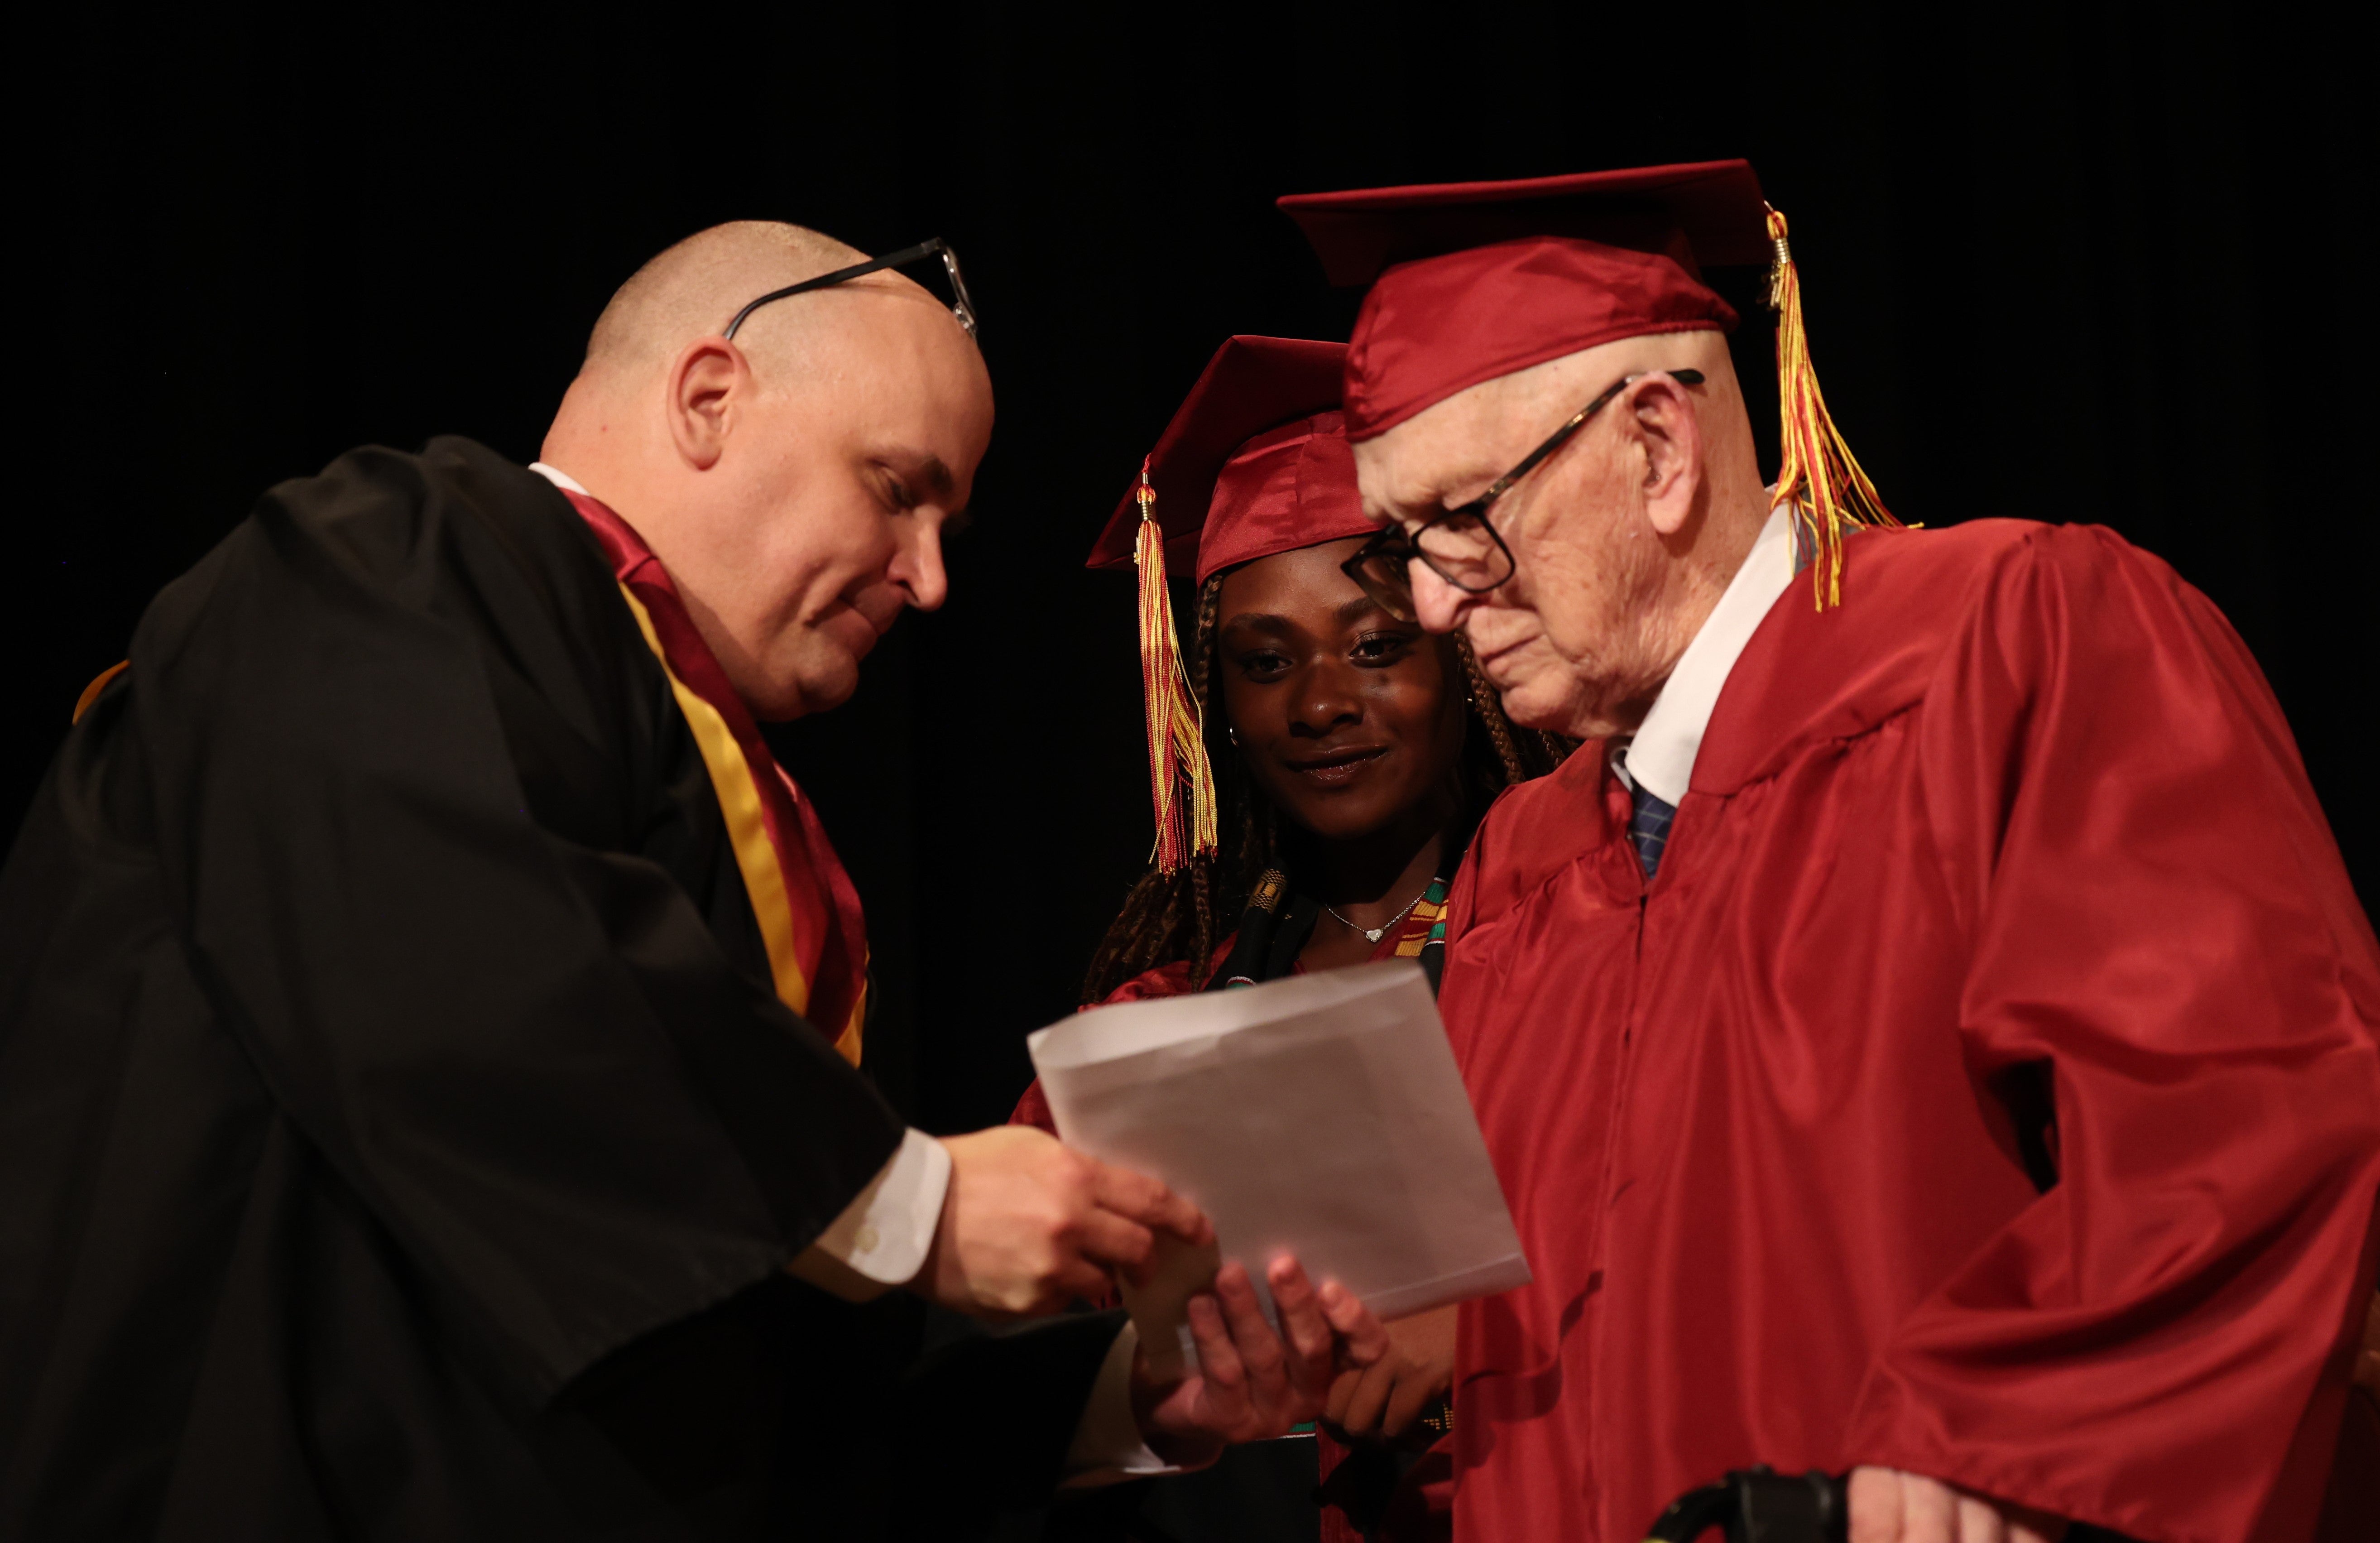 Harlan Olson, 101, accepts his diploma at Denfeld High School this month alongside senior Grace Nonnemacher